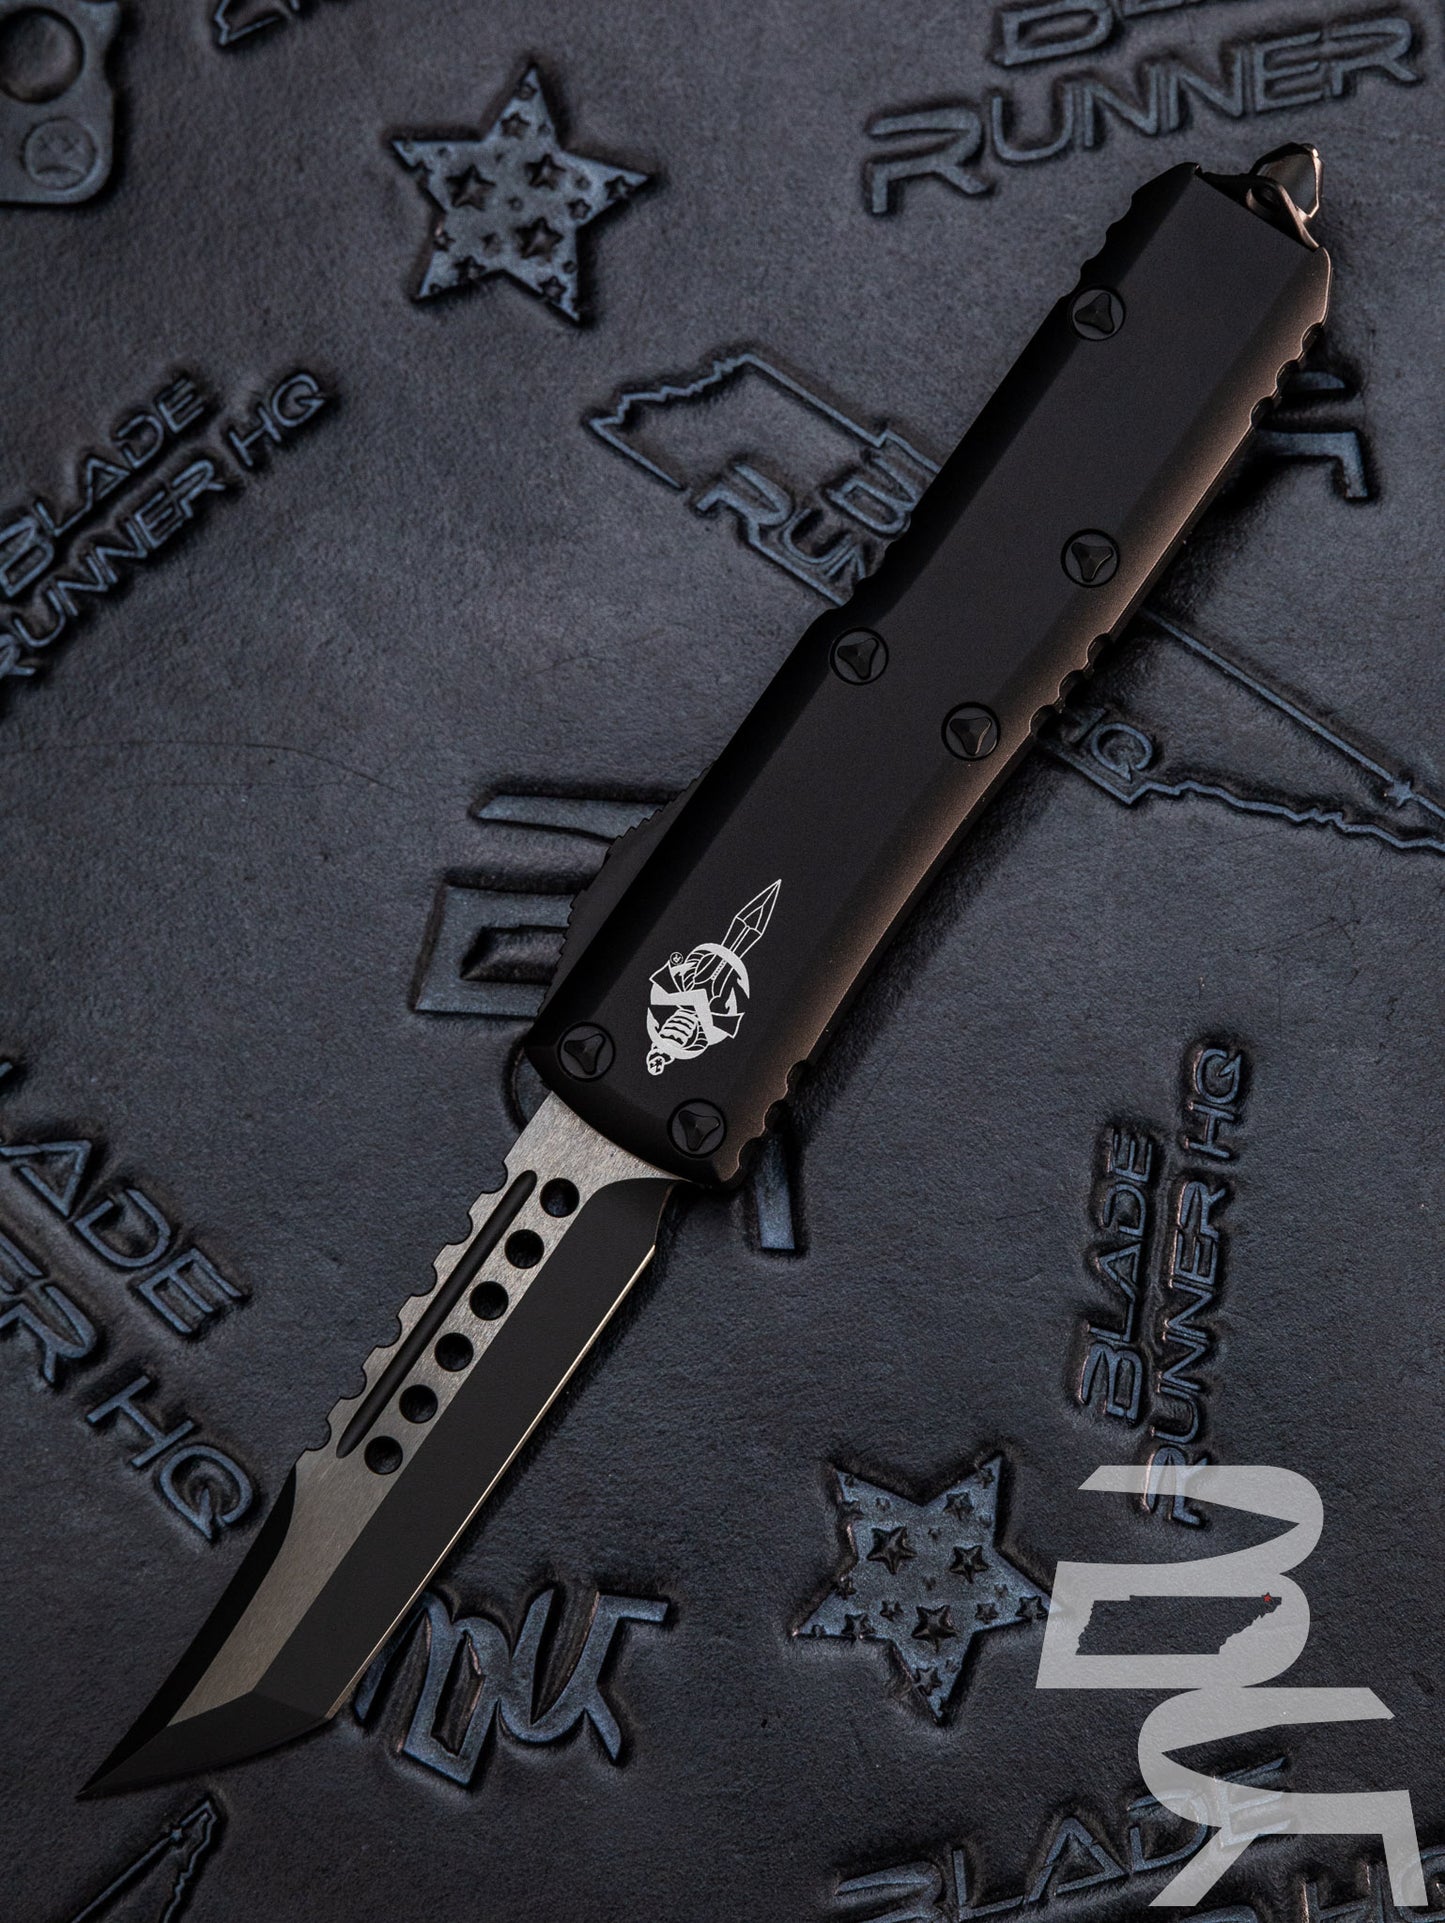 MICROTECH UTX-85 OTF KNIFE- HELLHOUND EDGE- TACTICAL- BLACK HANDLE- BLACK BLADE- BLACK HARDWARE 719-1 TS